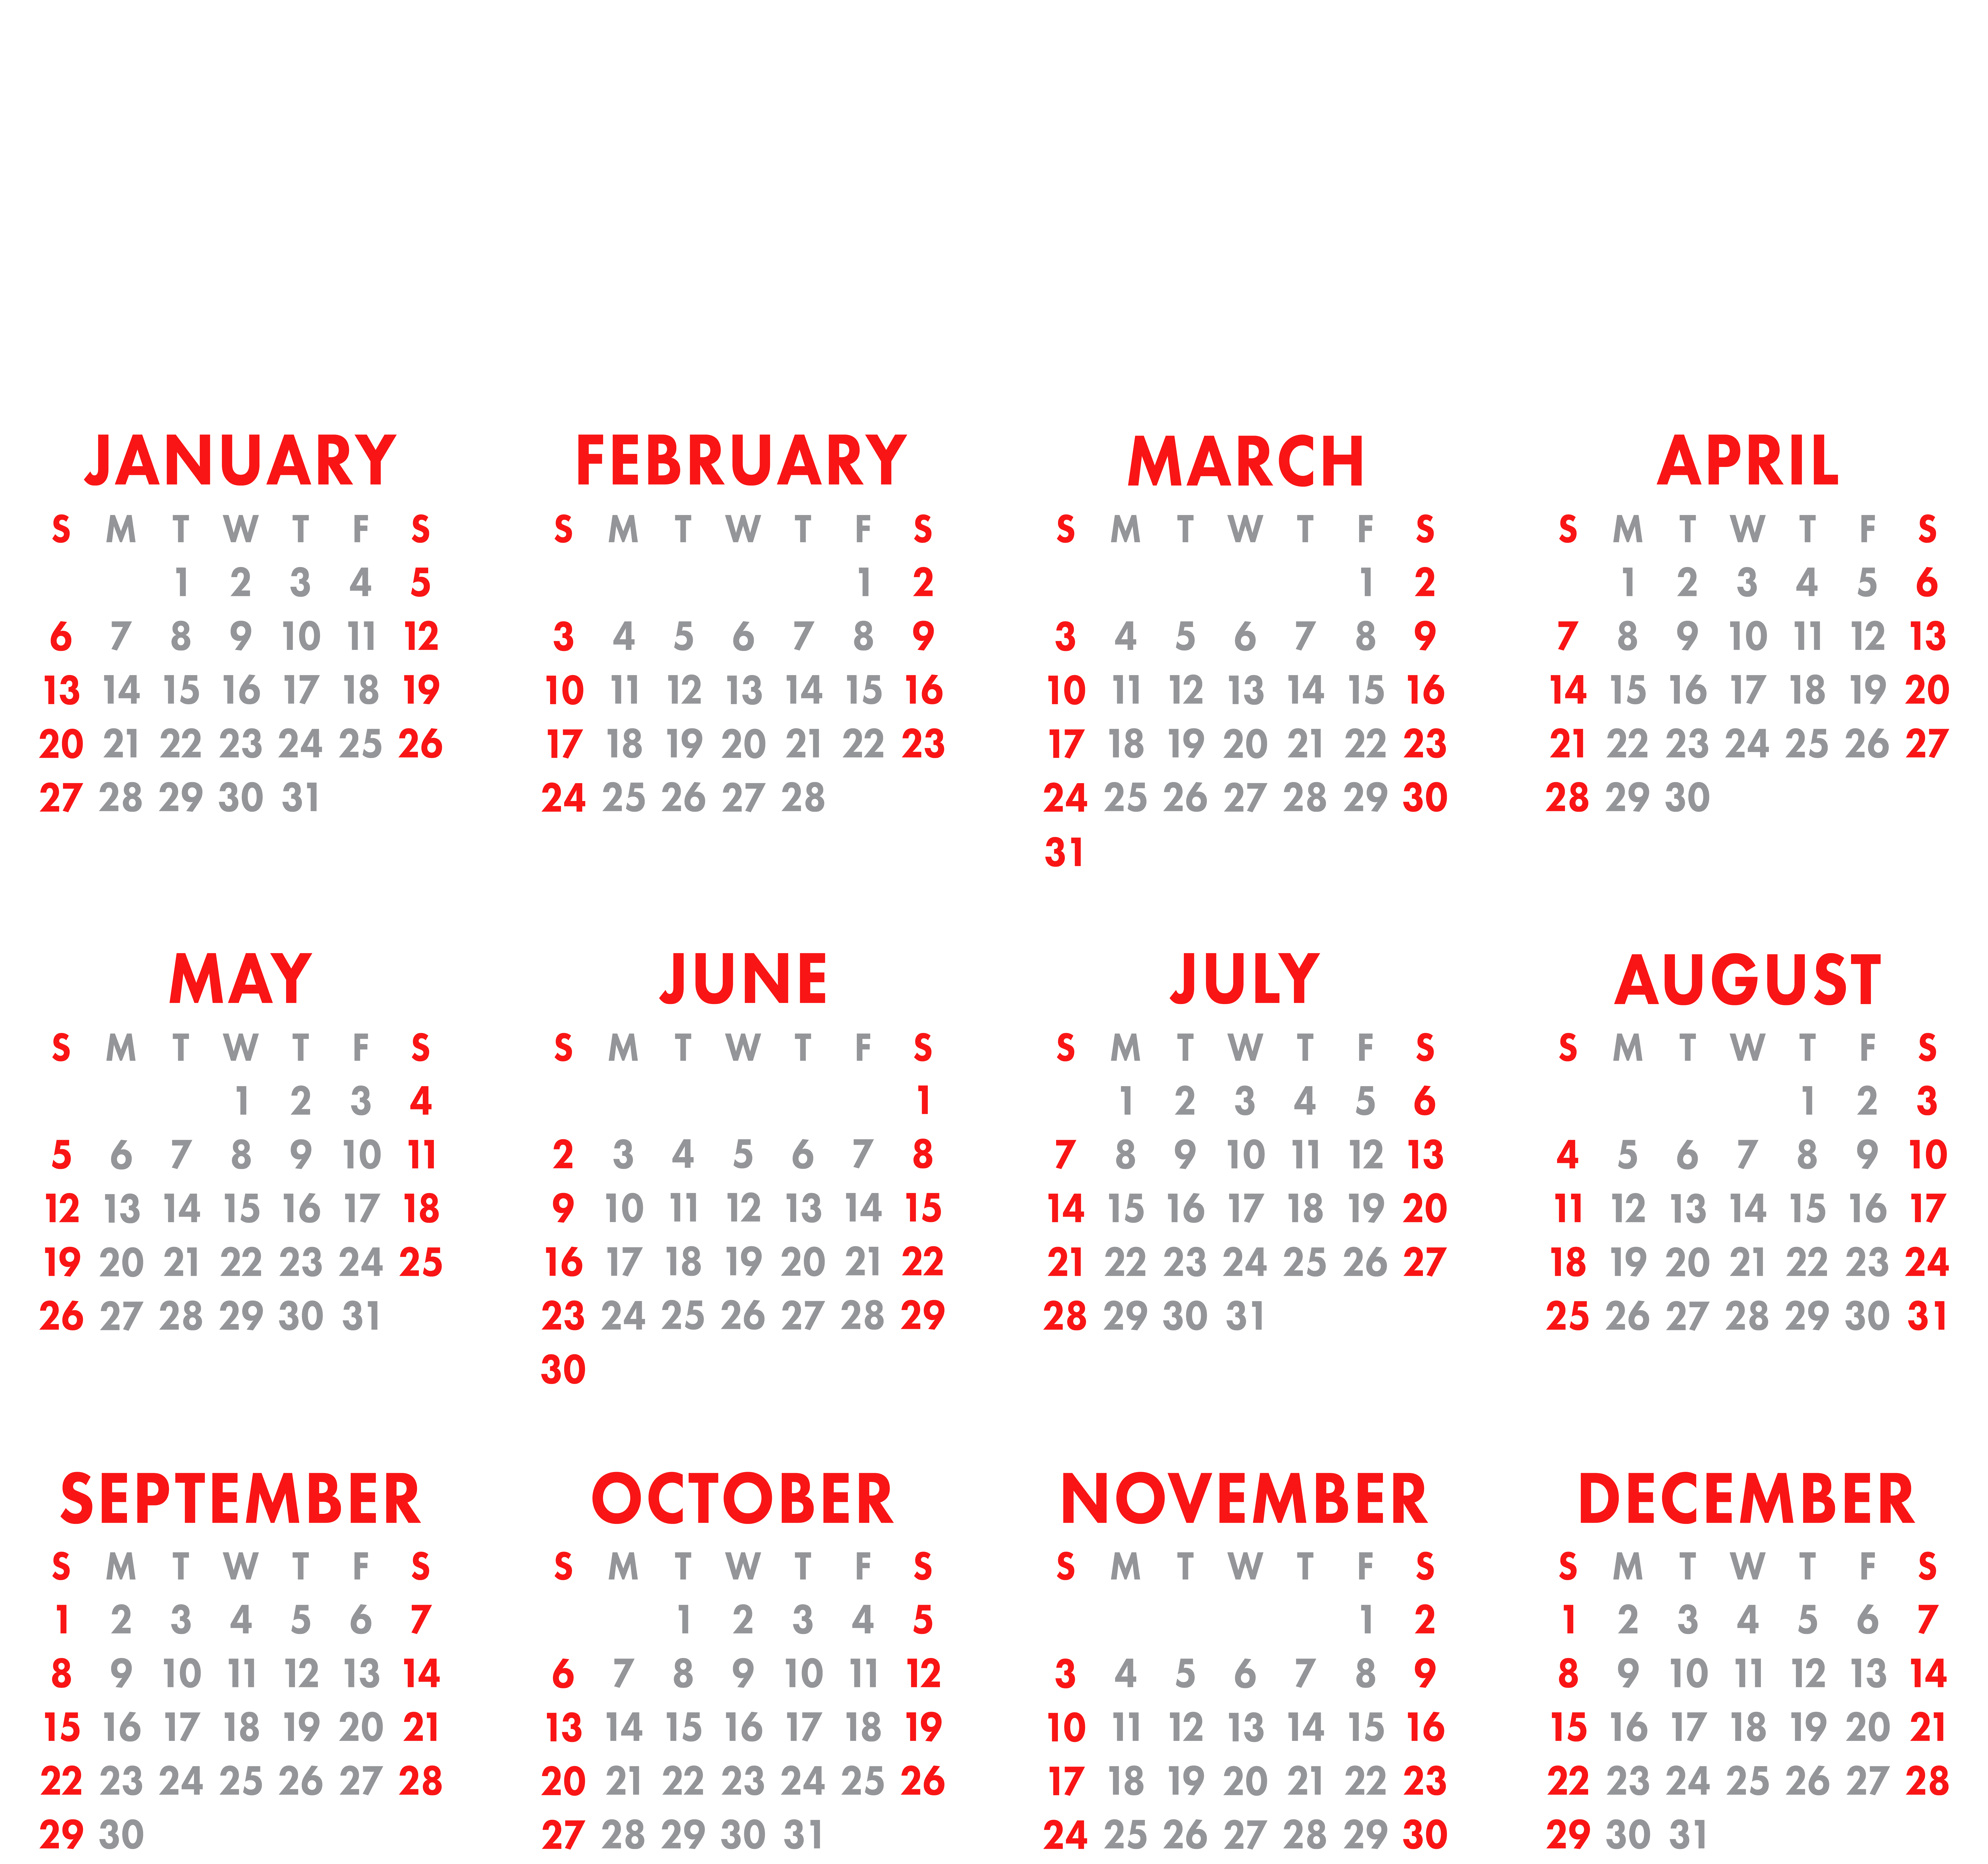 2019 Calendar Clipart Hd 14 Free Cliparts 